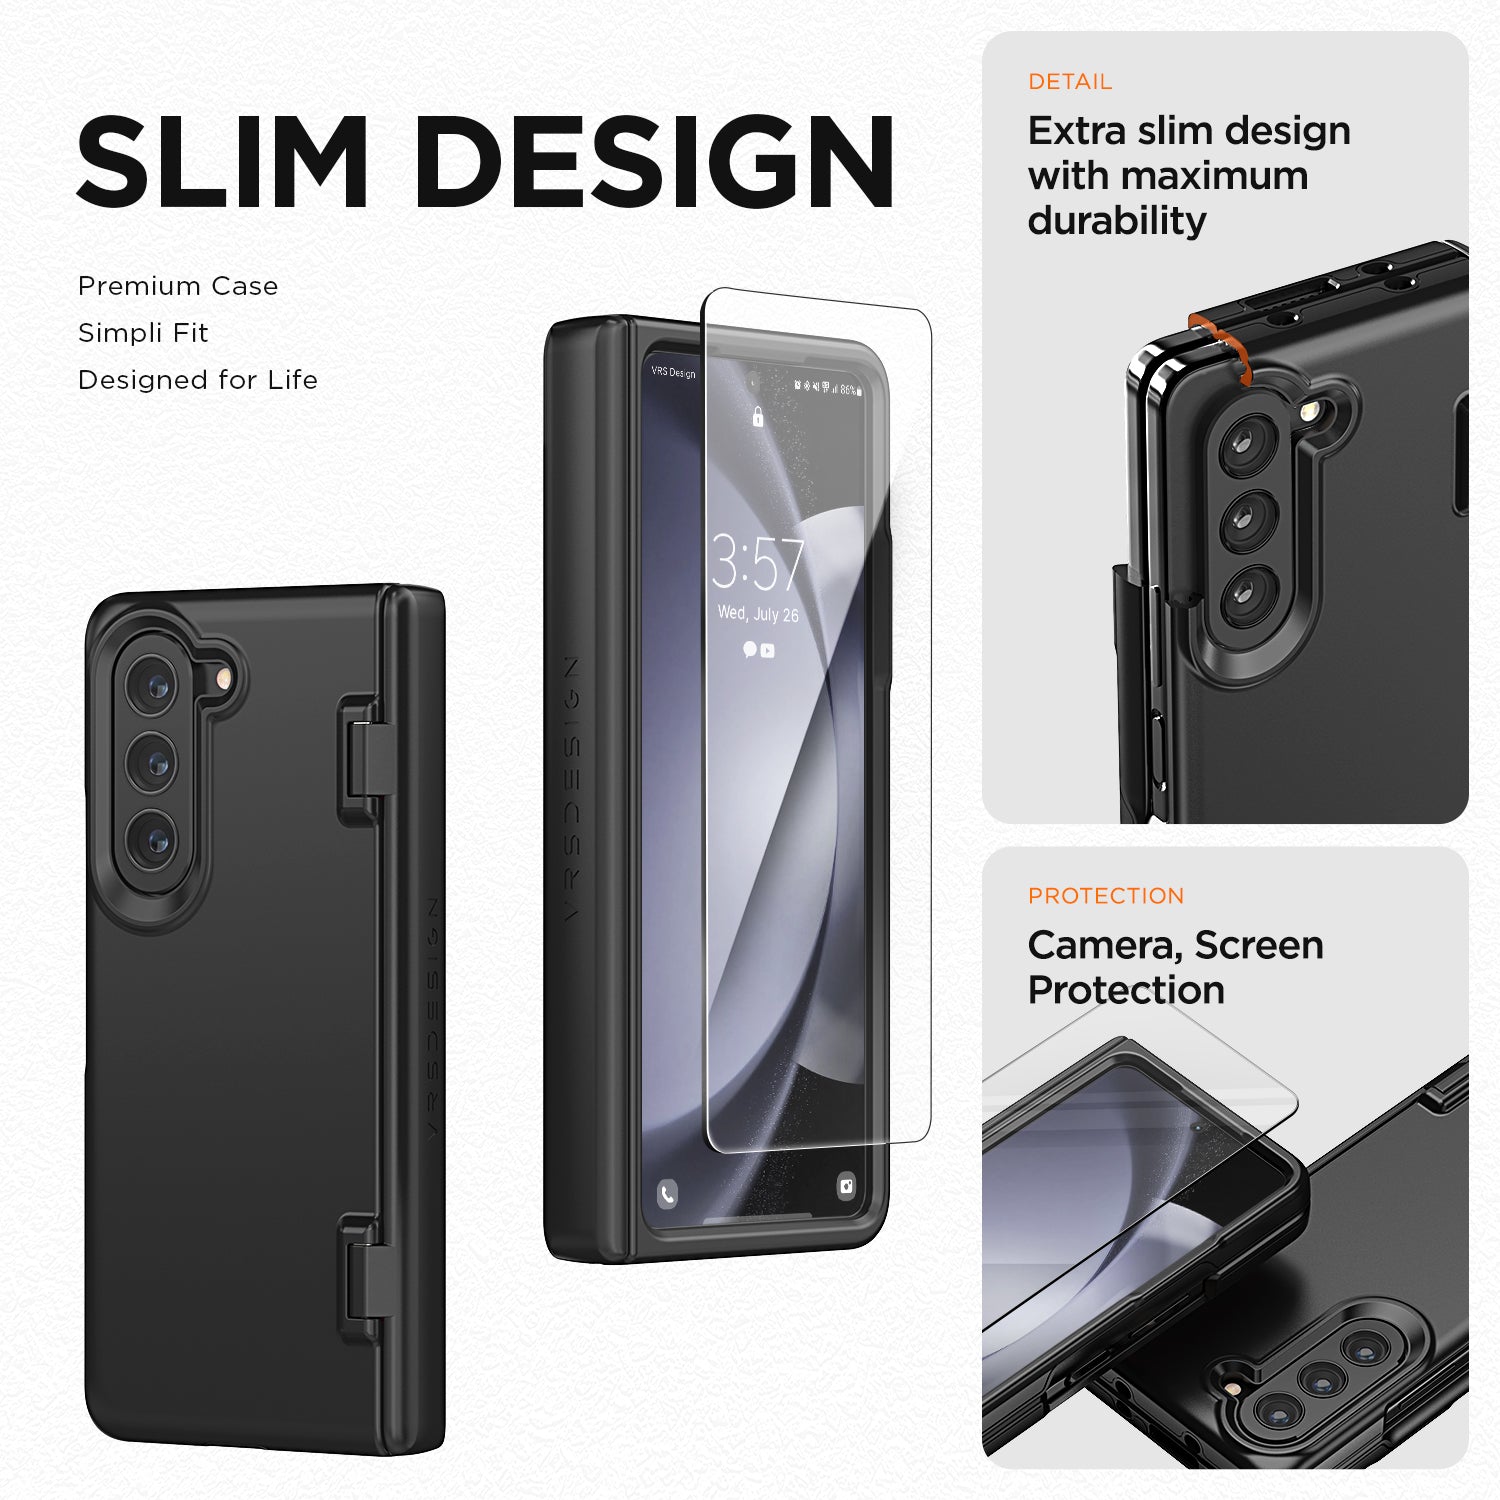 Samsung Galaxy Z Fold 5 slim rugged case multiple durable convenience card wallet storage sleek design minimalist modern women color perfect